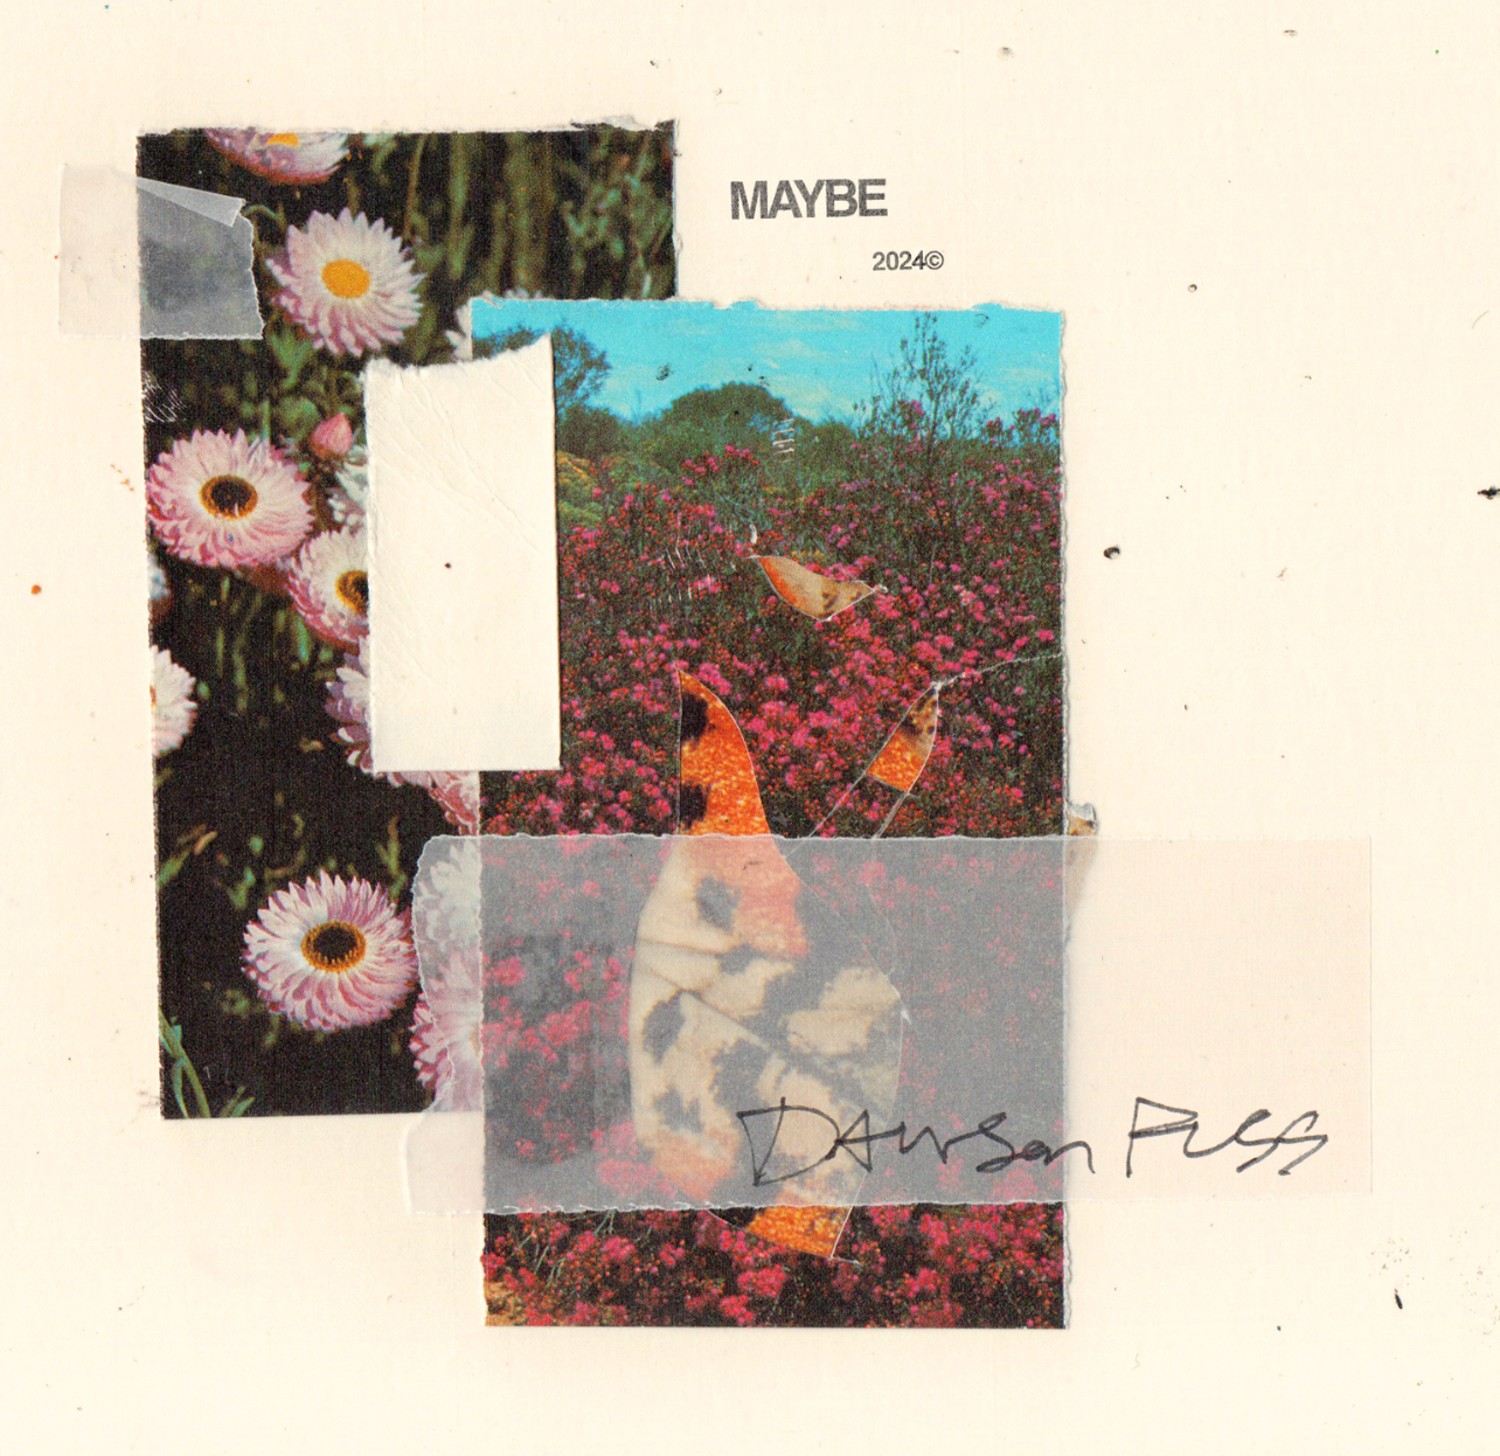 Dawson Fuss ‘Maybe’ [EP] album artwork